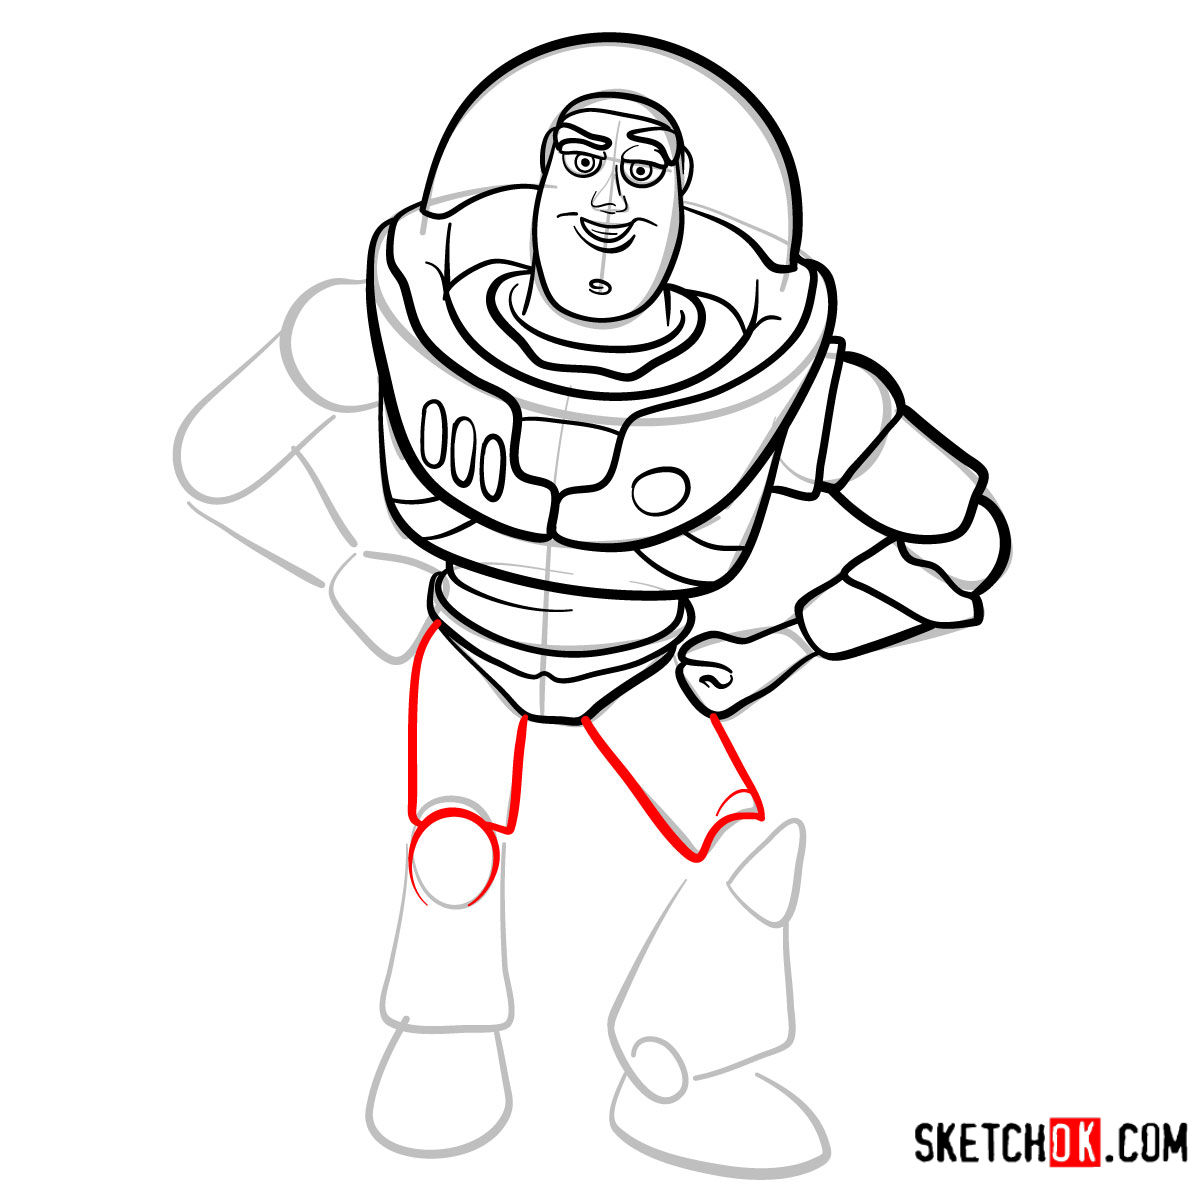 Buzz Lightyear Drawing Realistic Sketch